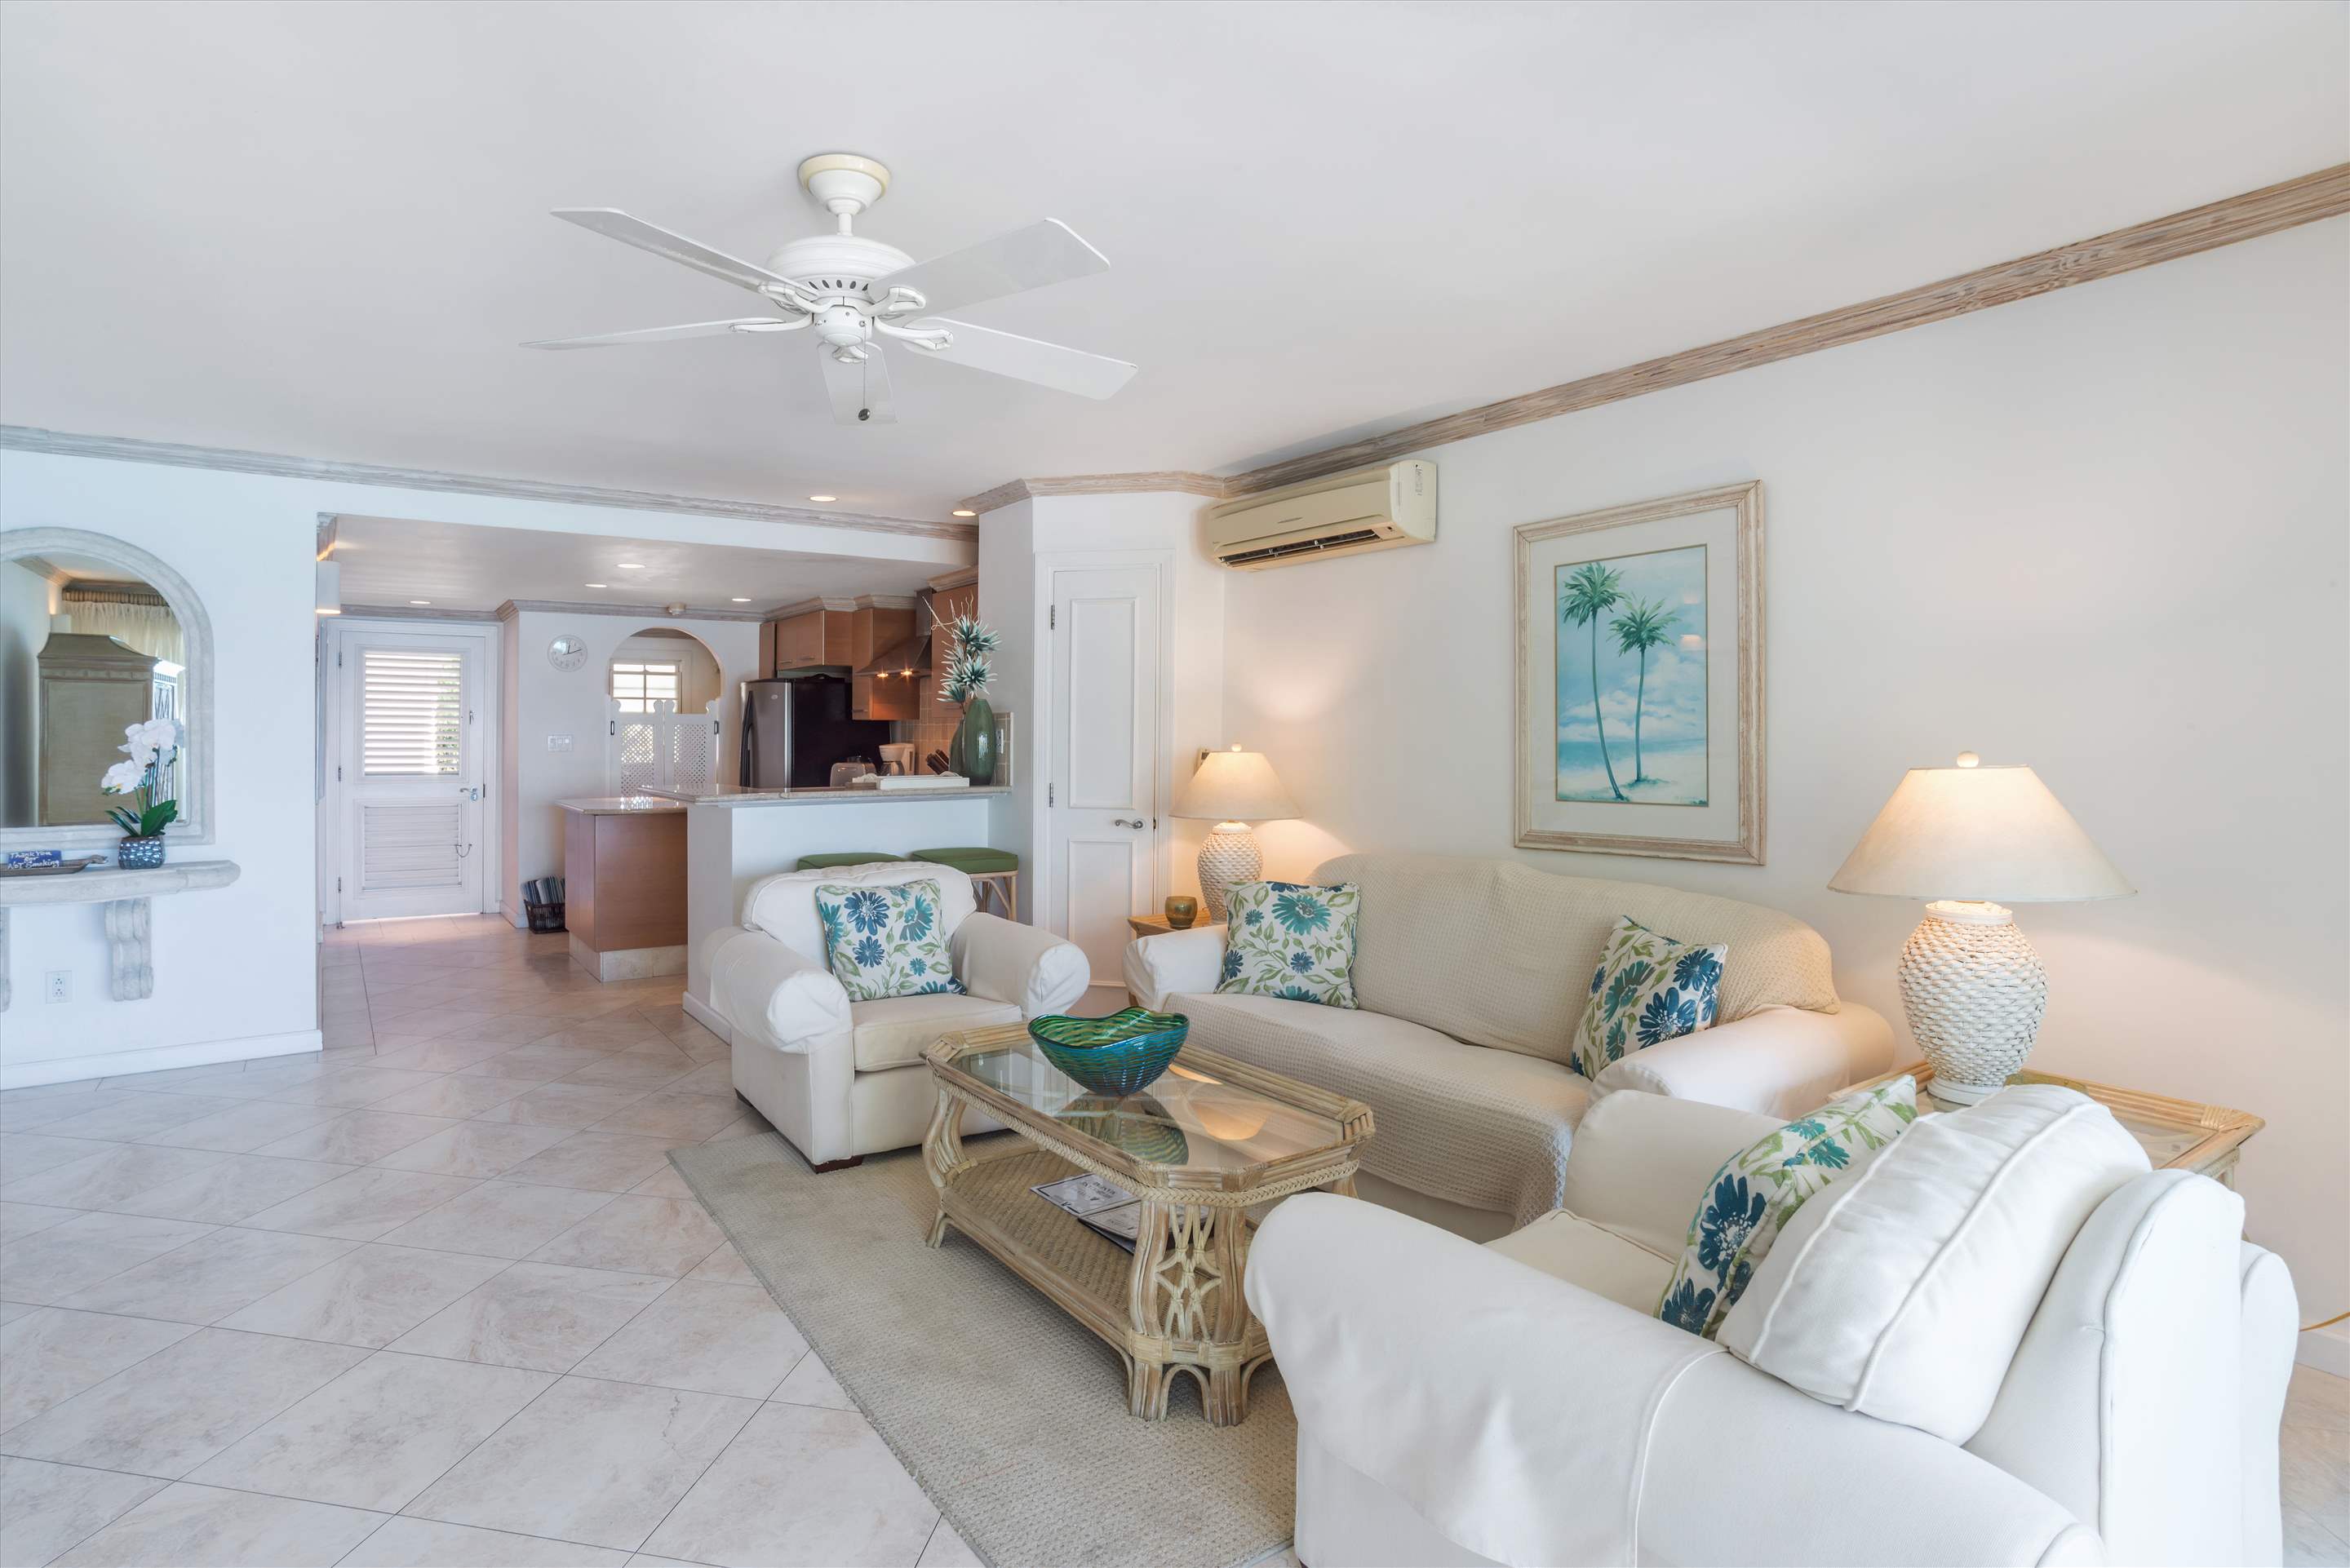 Villas on the Beach 205, 2 bedroom, 2 bedroom apartment in St. James & West Coast, Barbados Photo #6